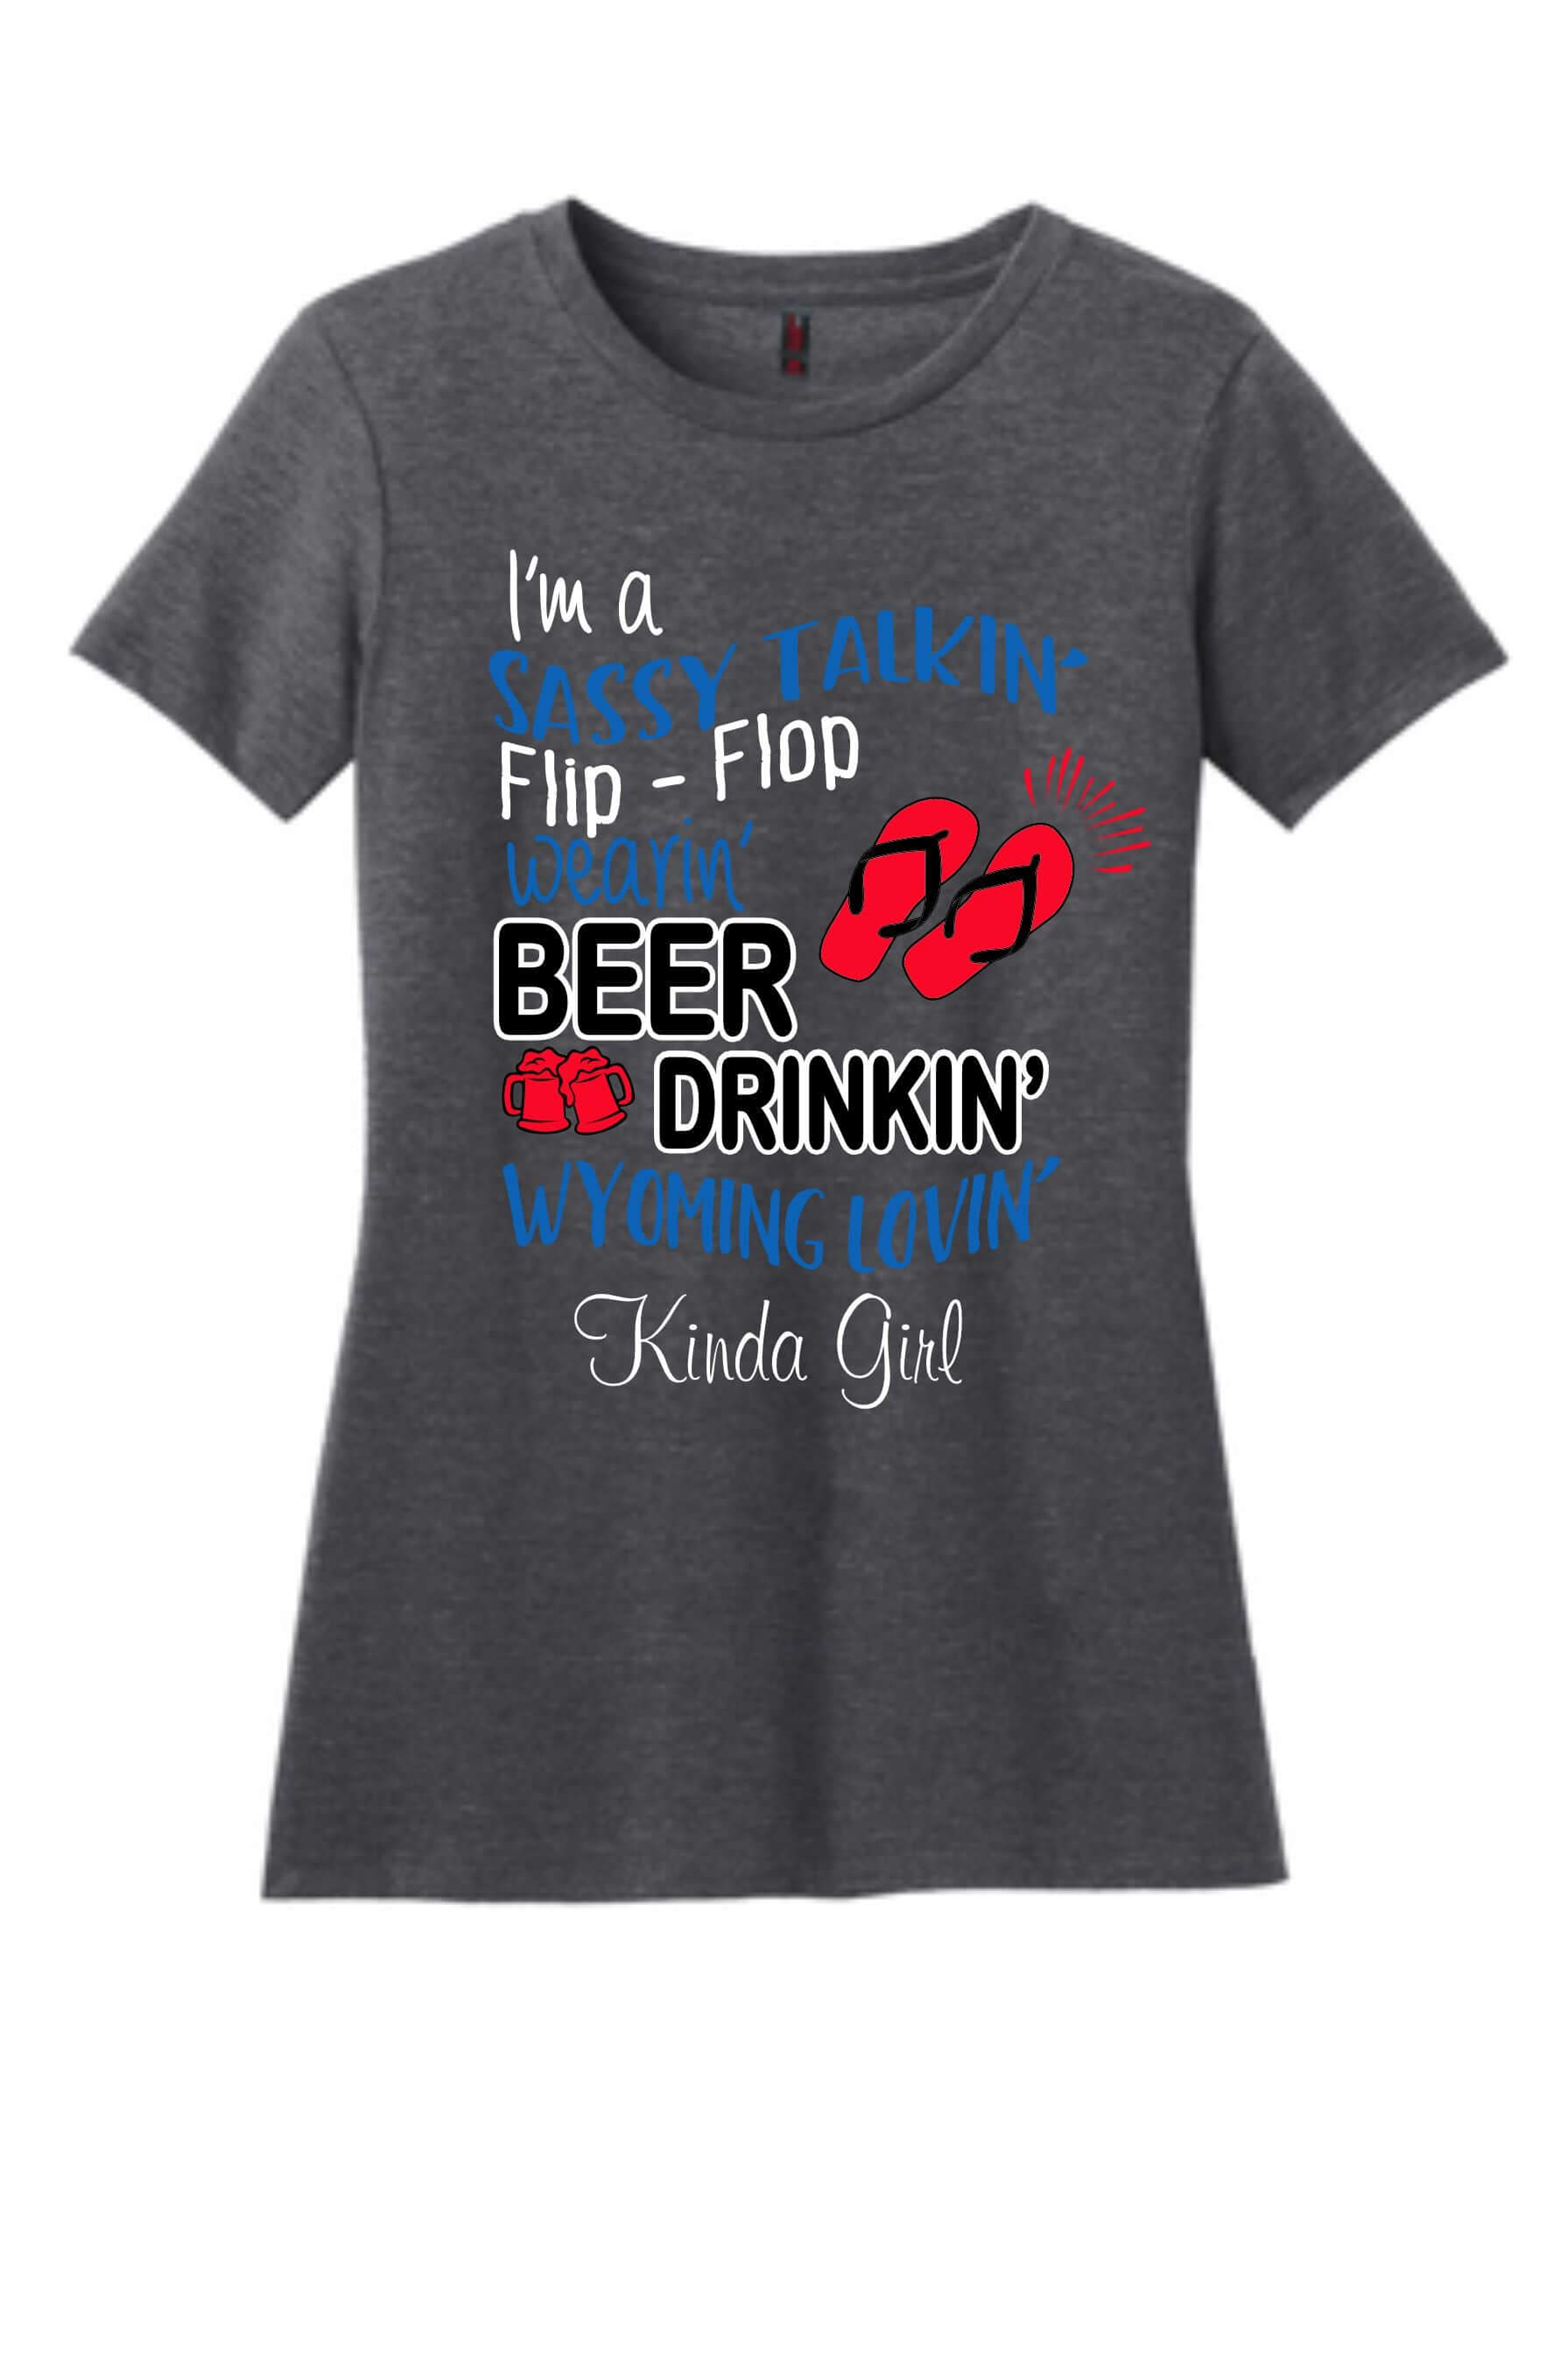 Wyoming Beer Drinking Girl